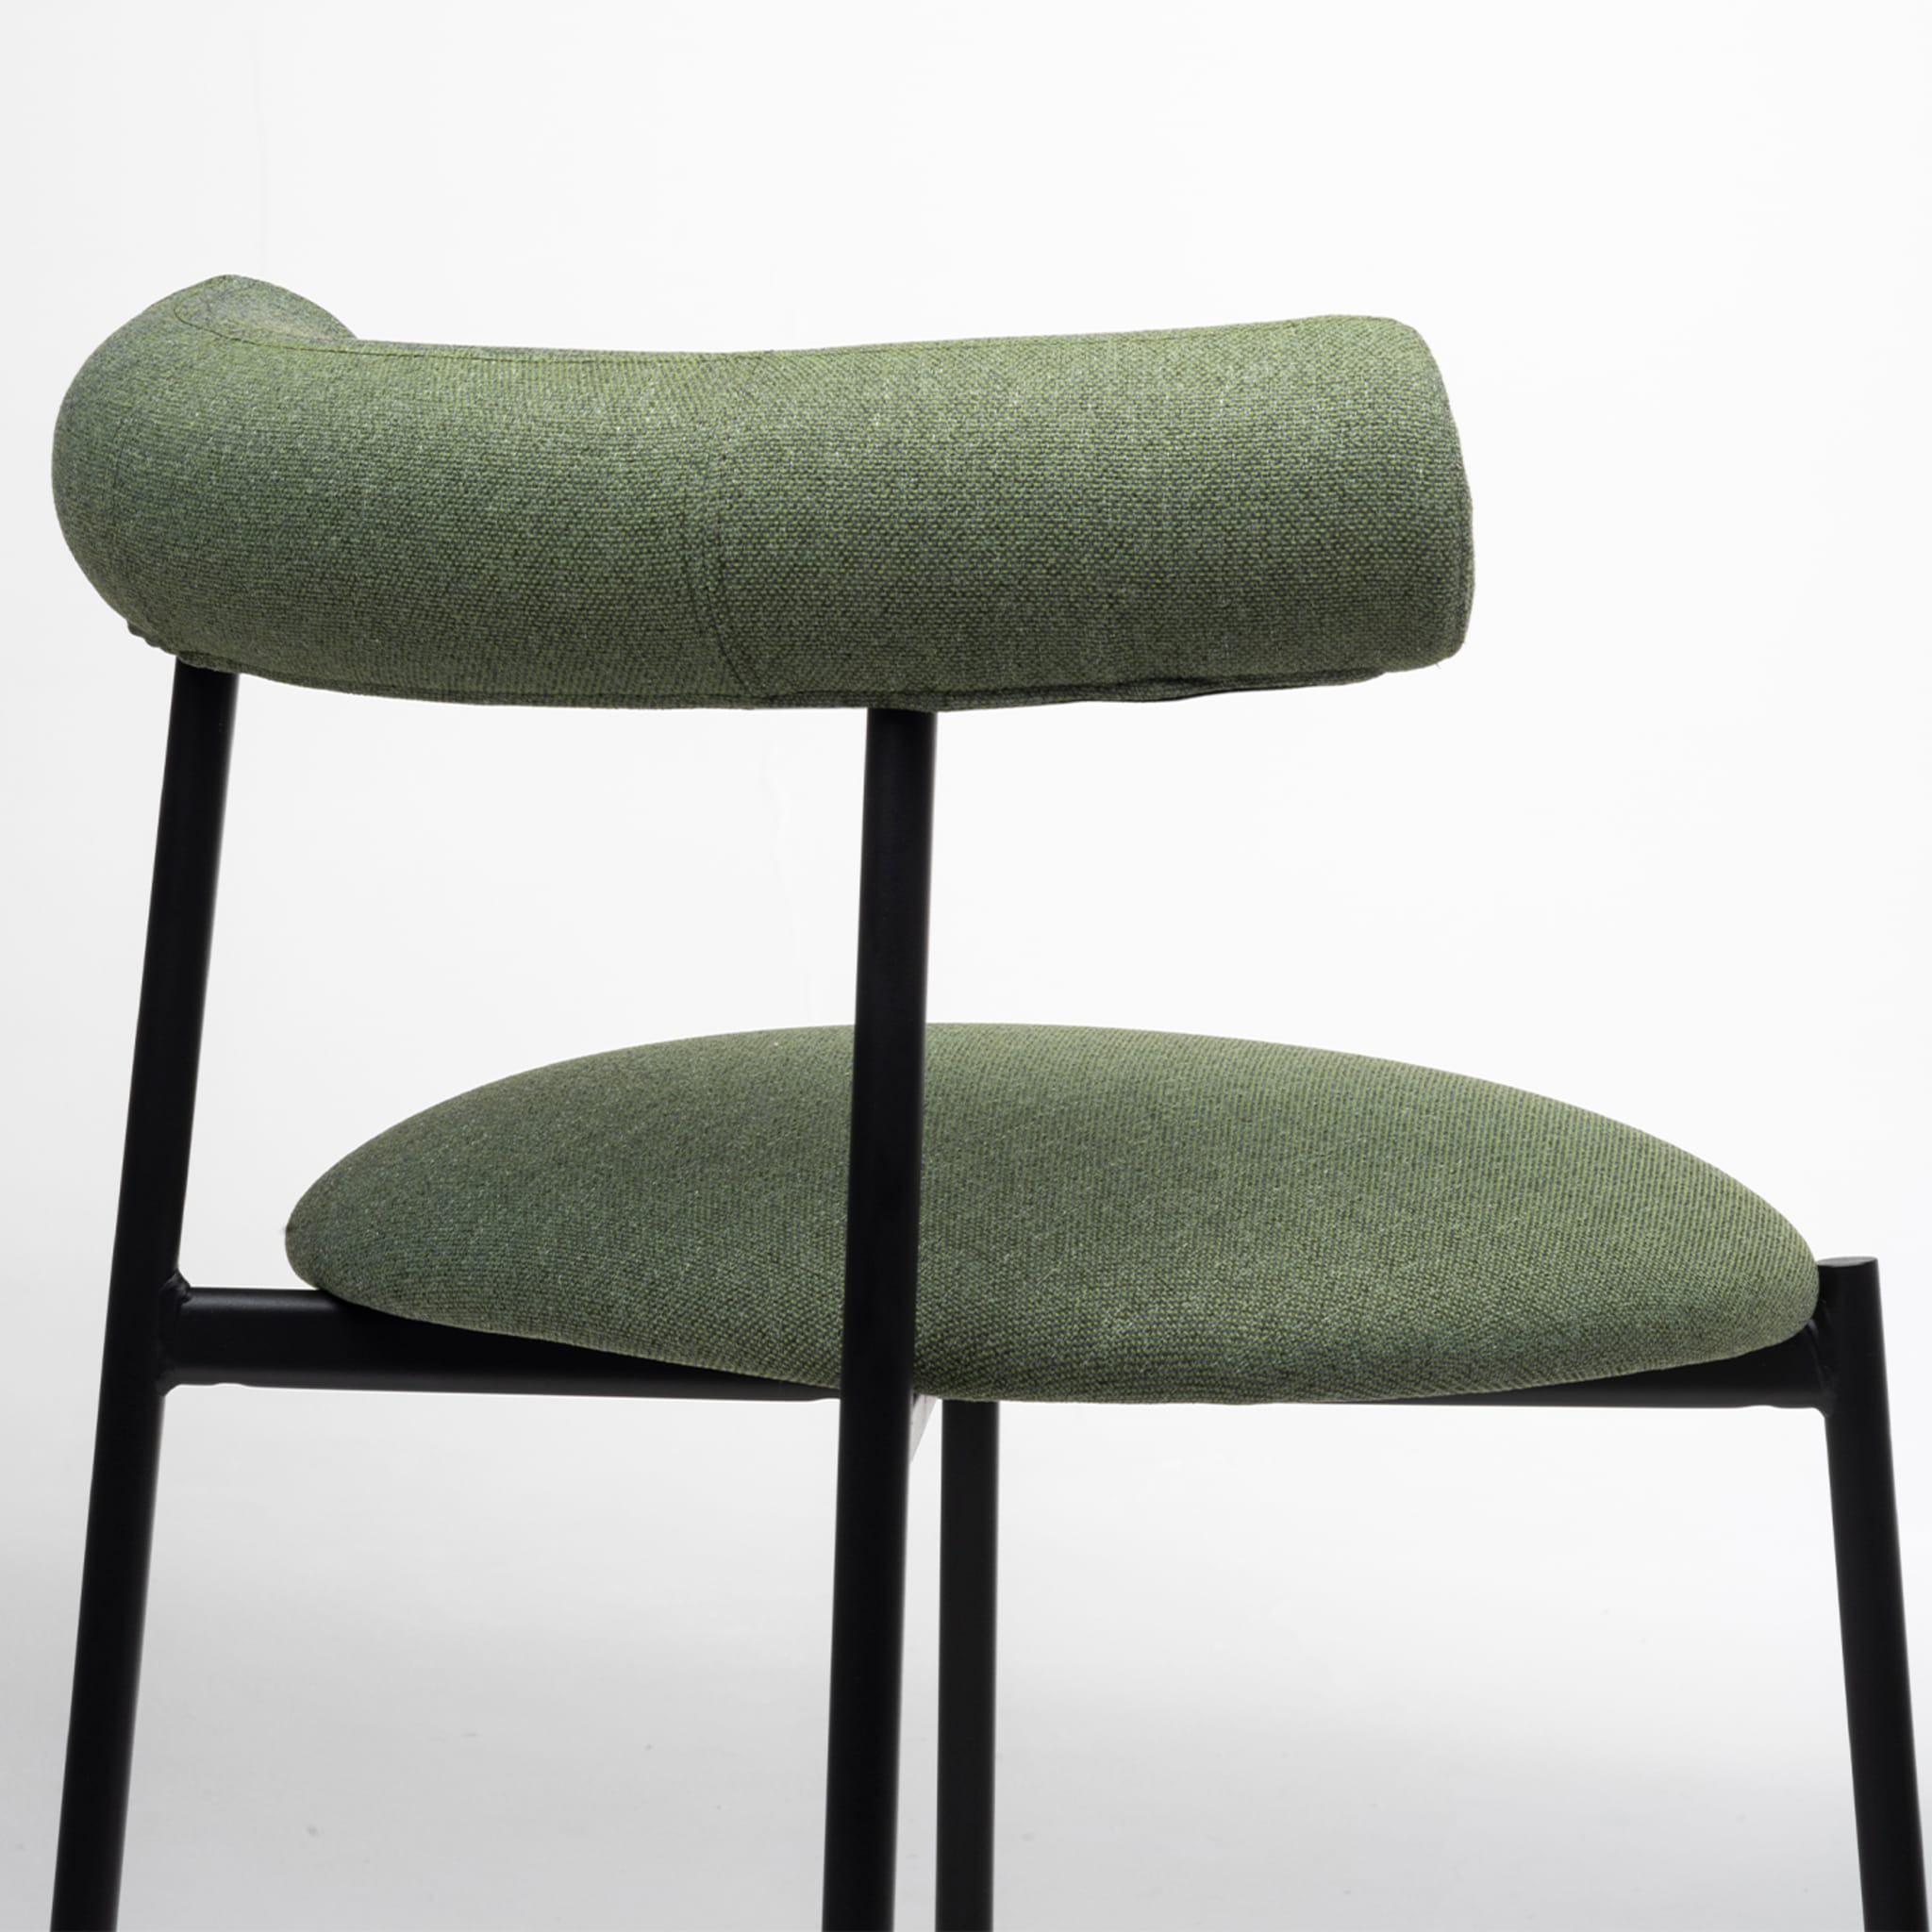 Pampa S Green & Black Chair by Studio Pastina - Alternative view 2